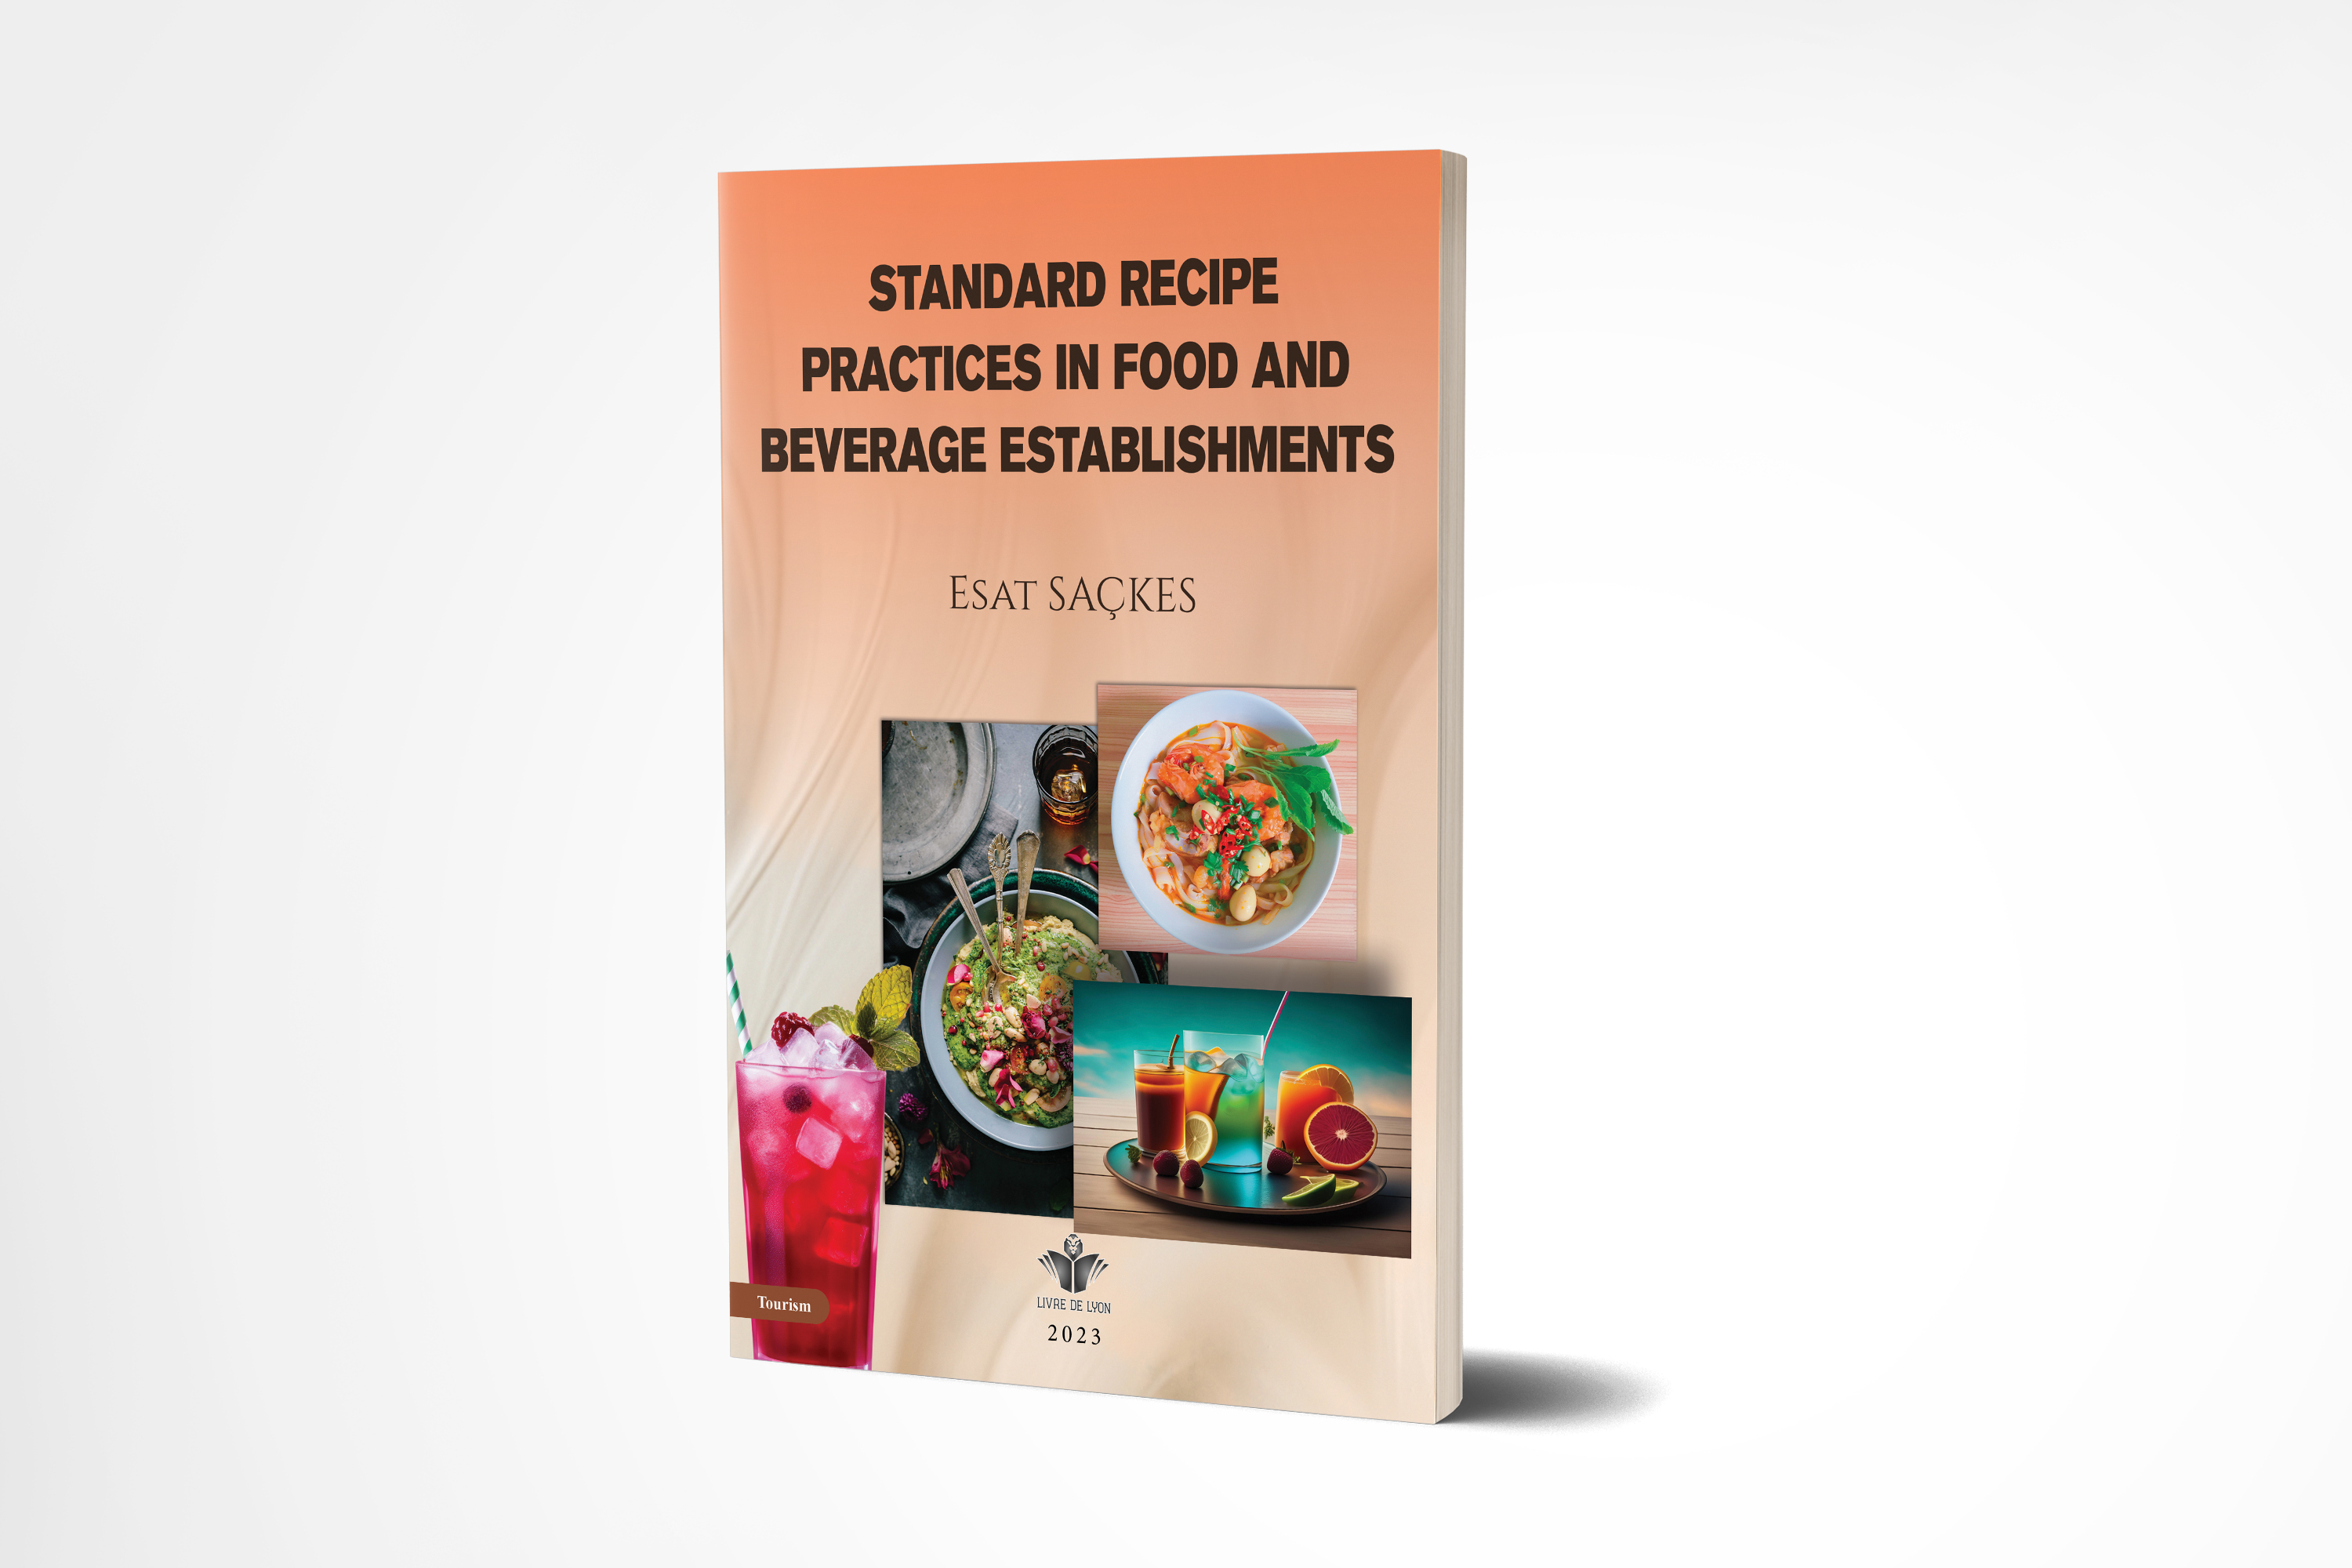 Standard Recipe Practices in Food and Beverage Establishments